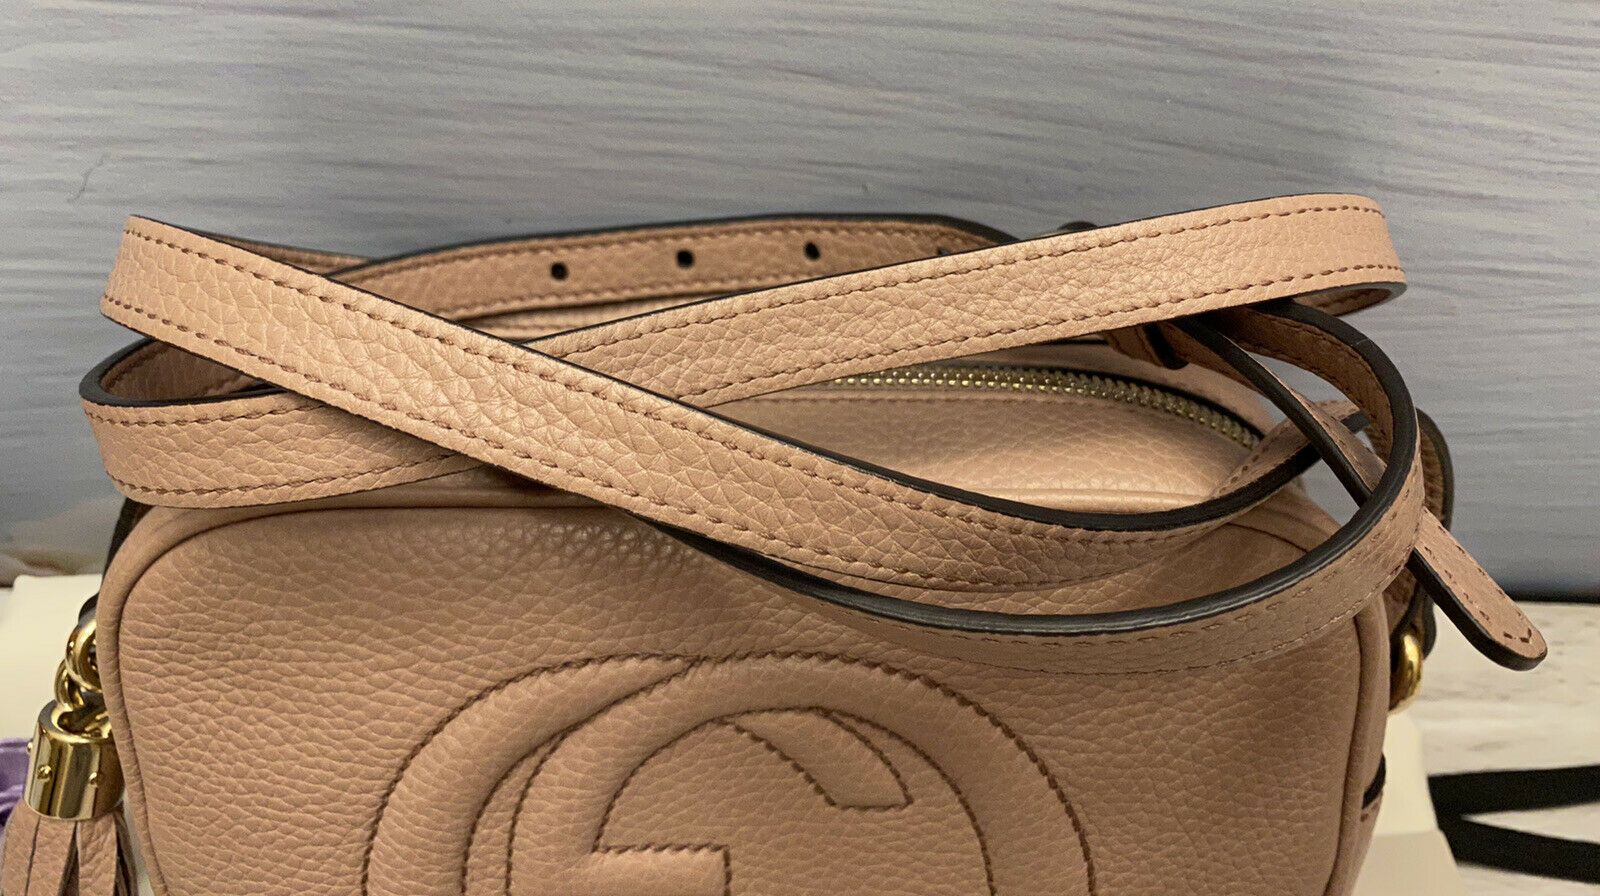 Gucci Soho Handbag 396201